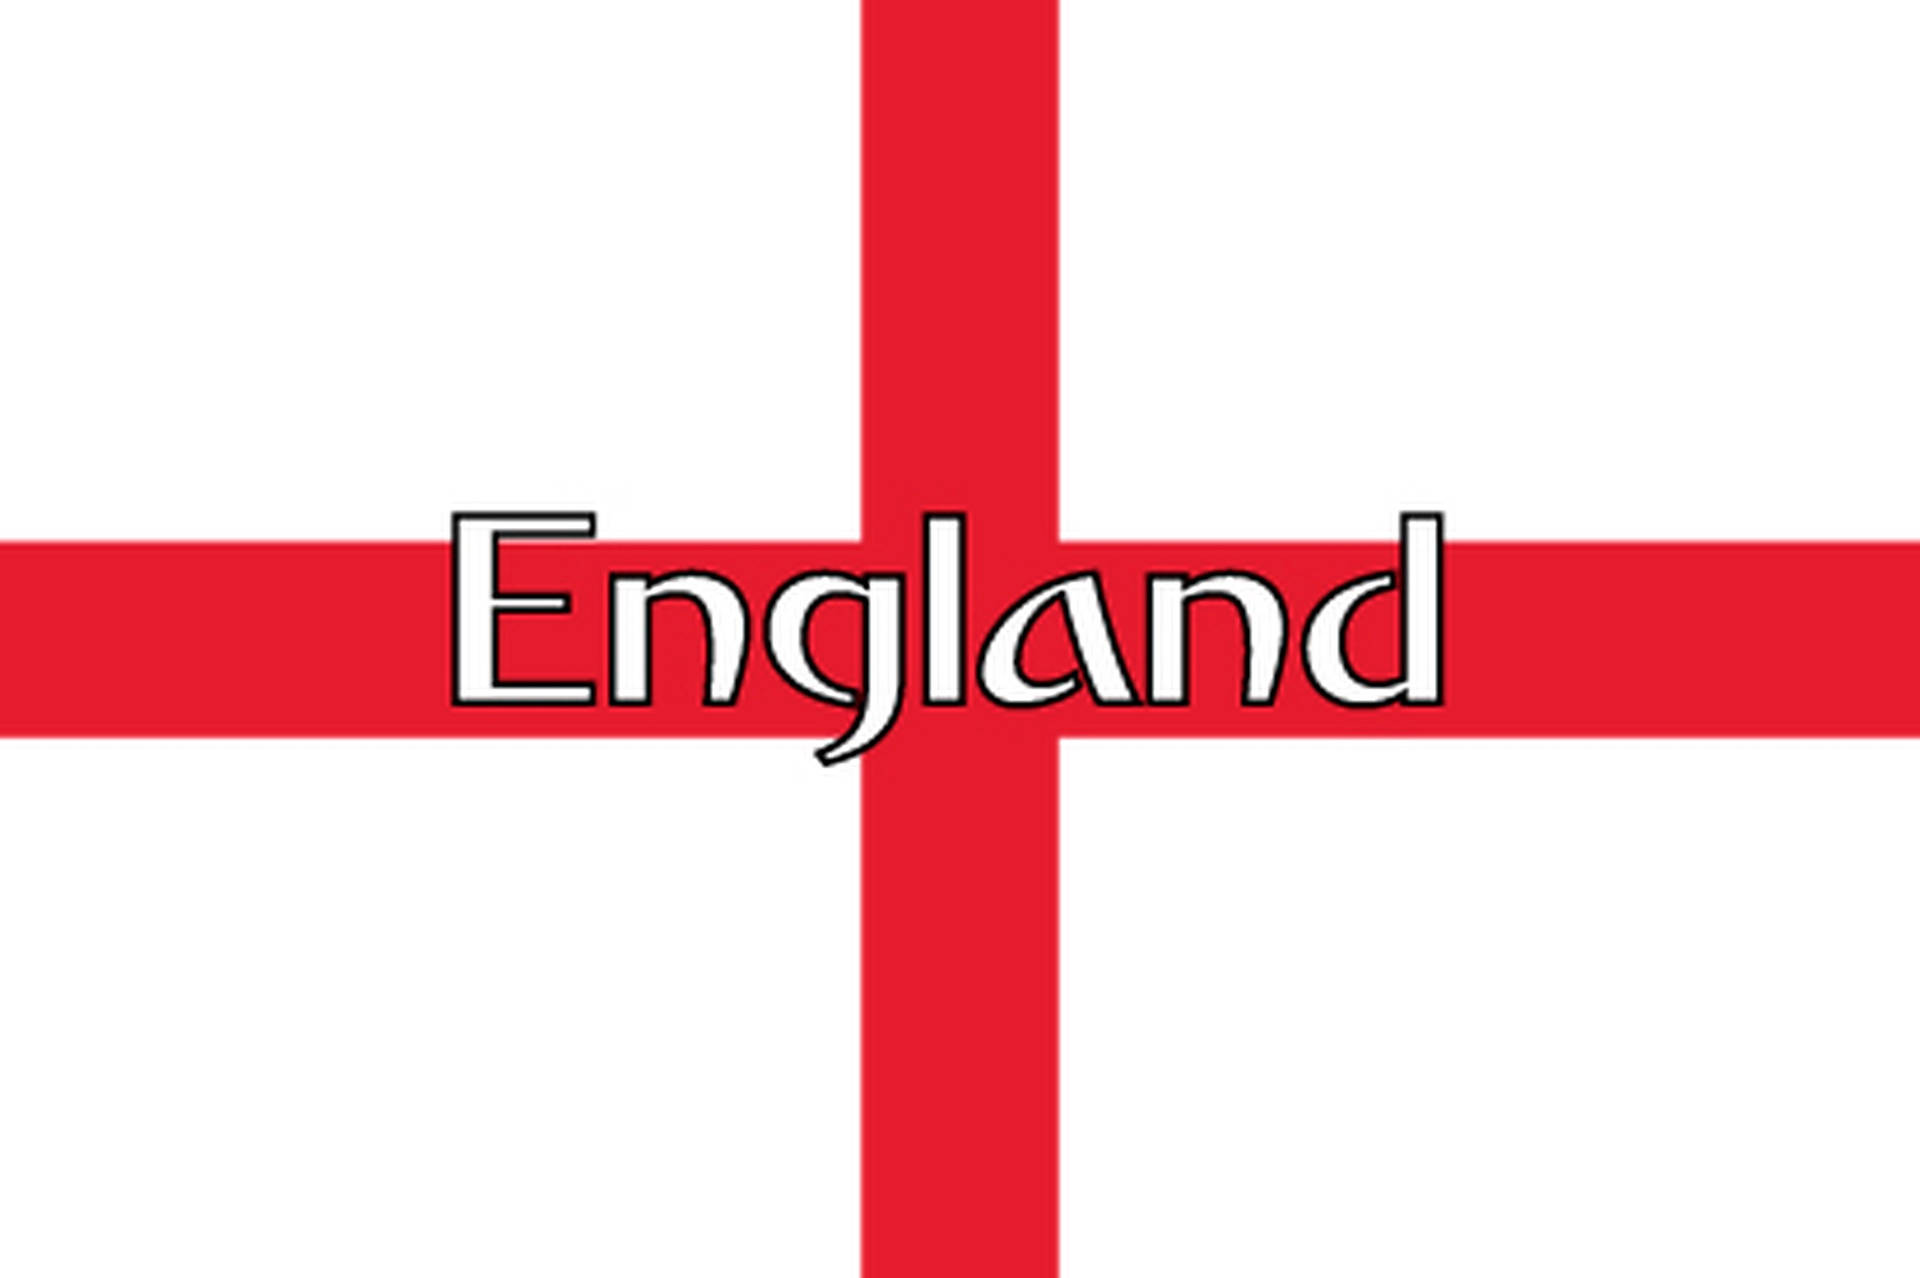 Obrade Arte Da Bandeira Da Inglaterra. Papel de Parede